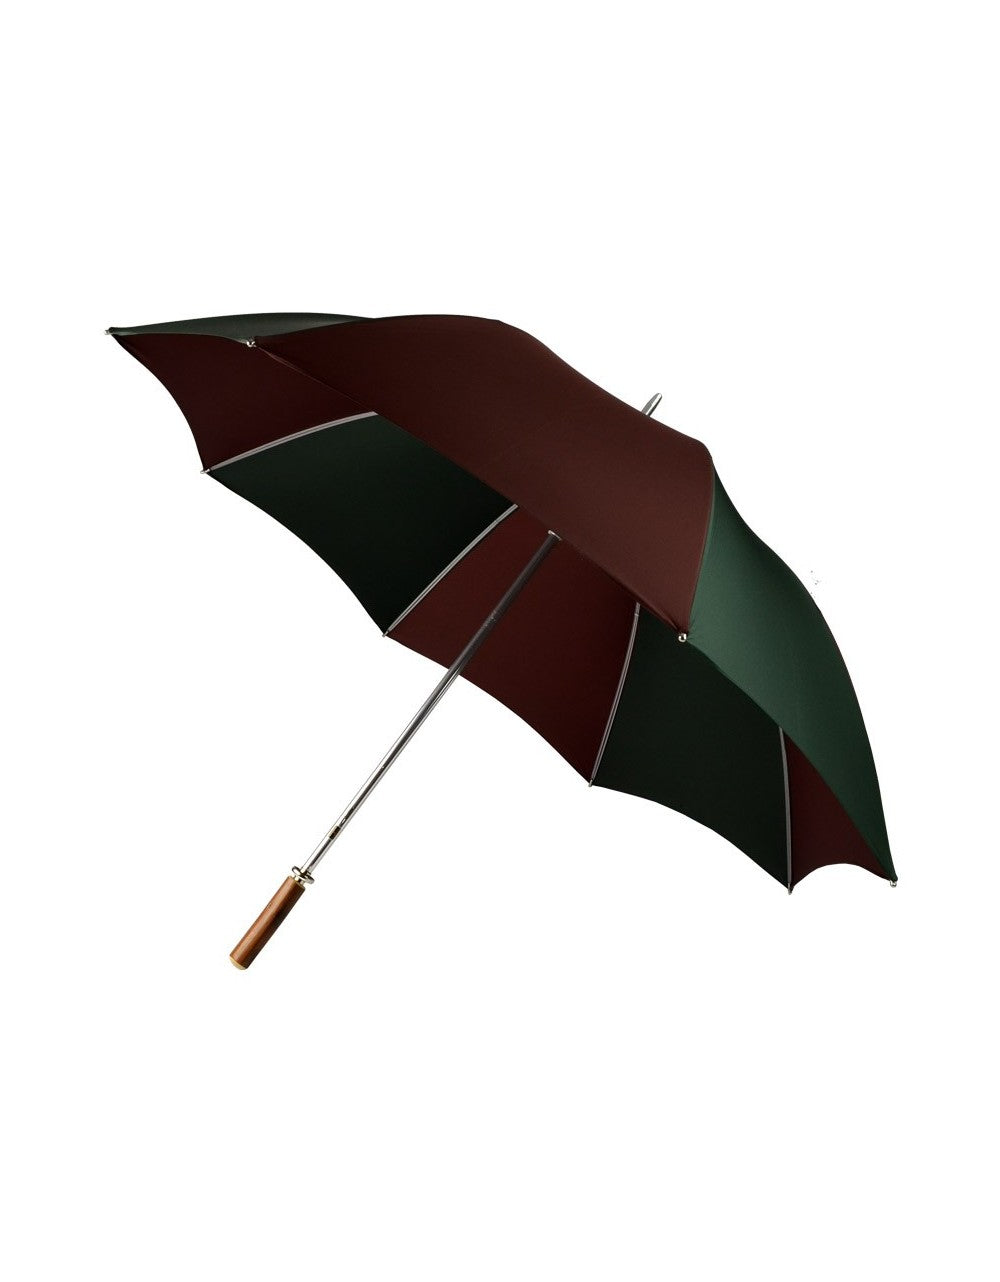 Classic Golf Umbrella | Polished Chestnut Straight Handle | Tartan Plaid Canopy | England's Finest Umbrella | The Fox Umbrella